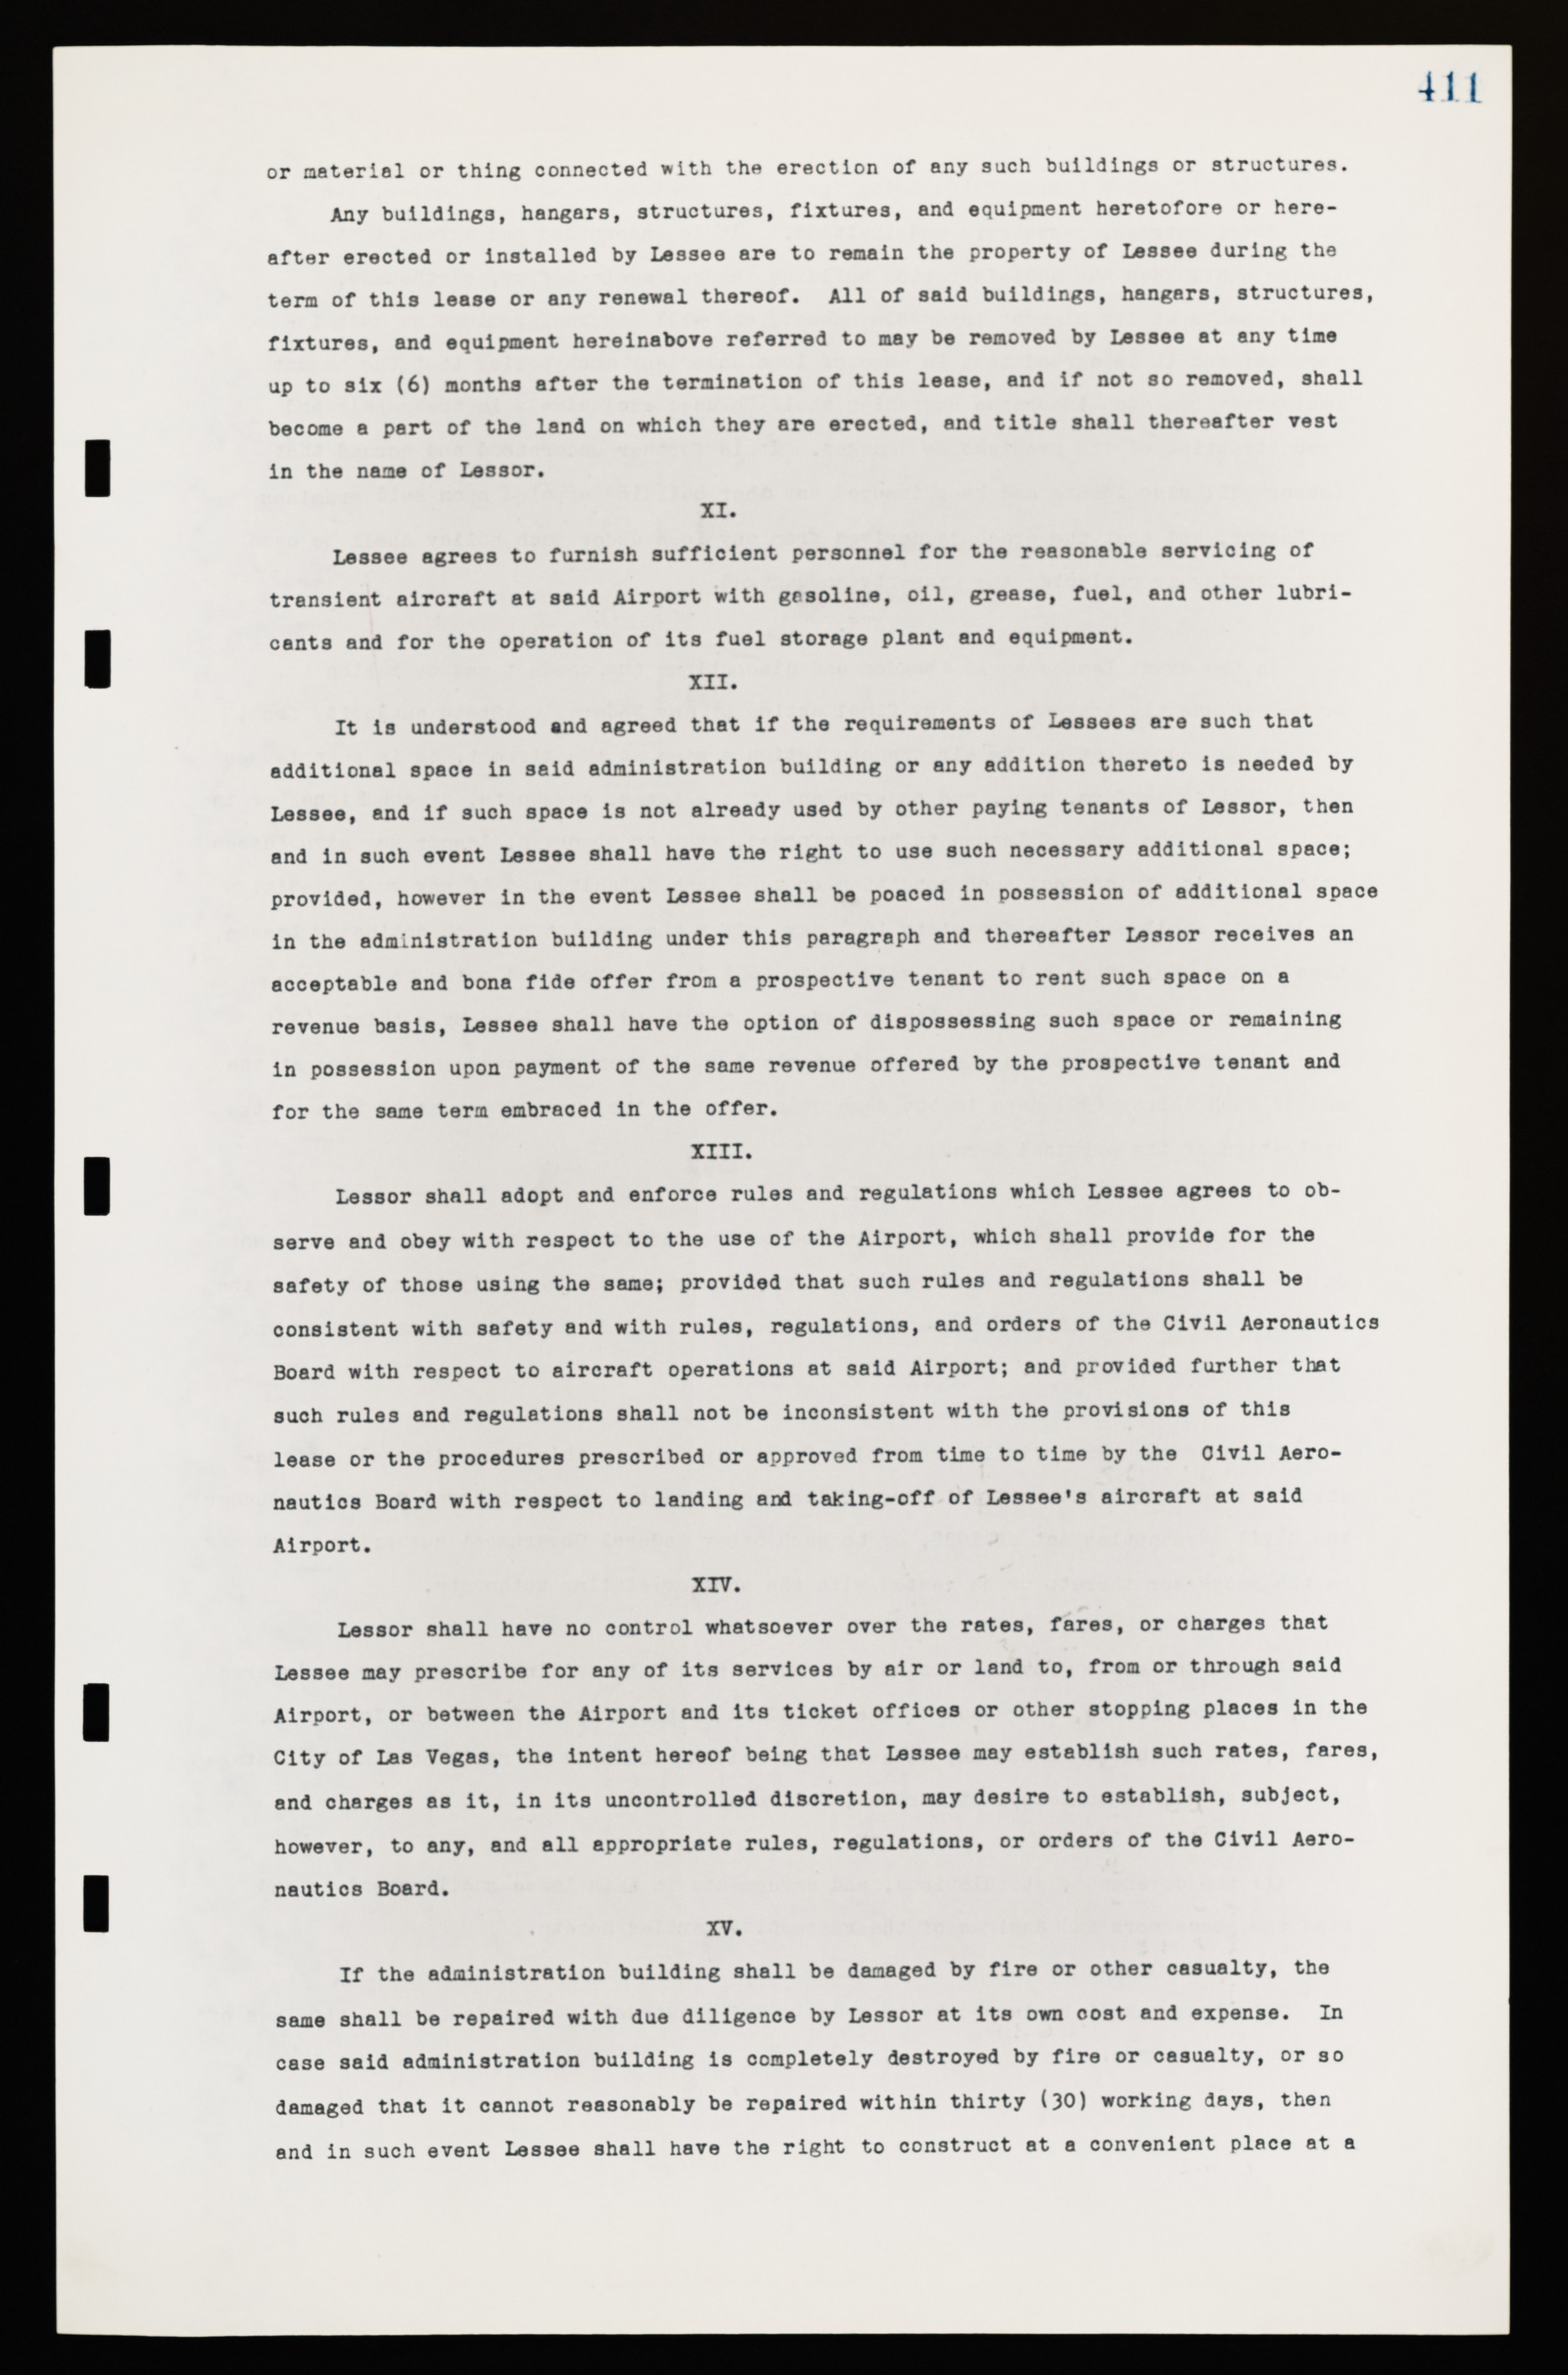 Las Vegas City Commission Legal Documents, February 29, 1944 to February 21, 1945, lvc000016-104